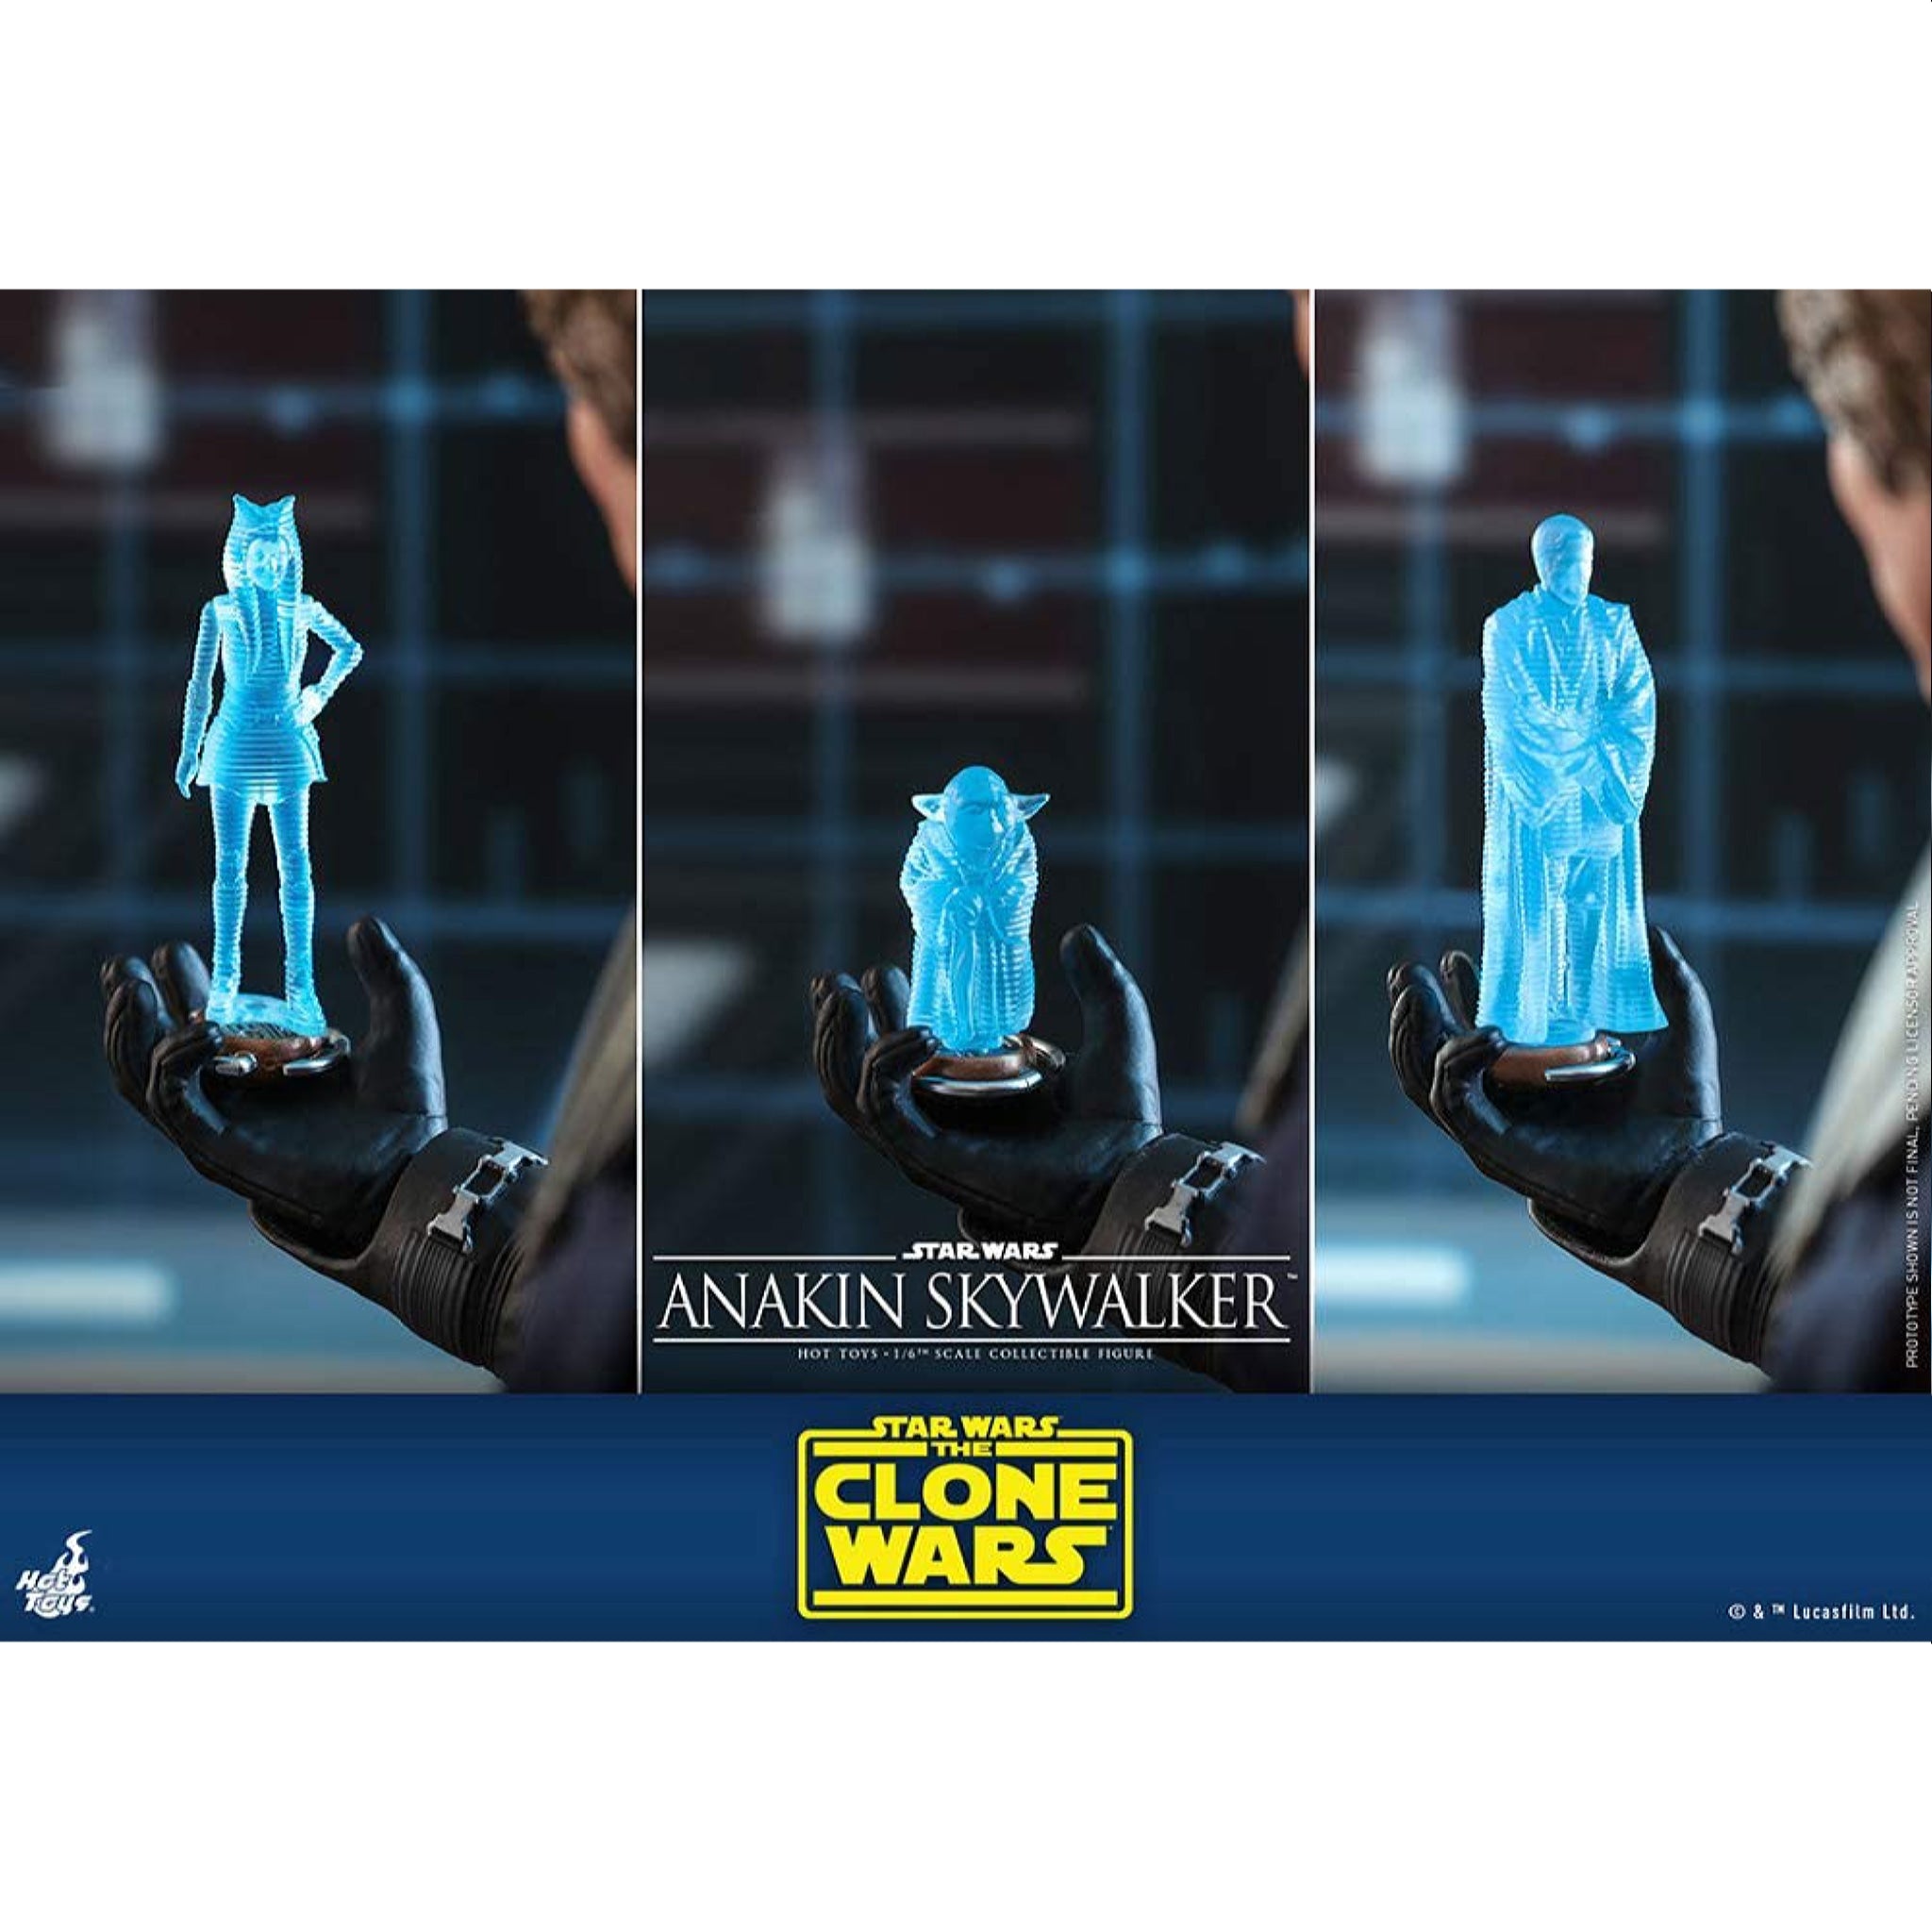 Hot Toys Star Wars The Clone Wars Television Masterpiece Anakin Skywalker Action Figure